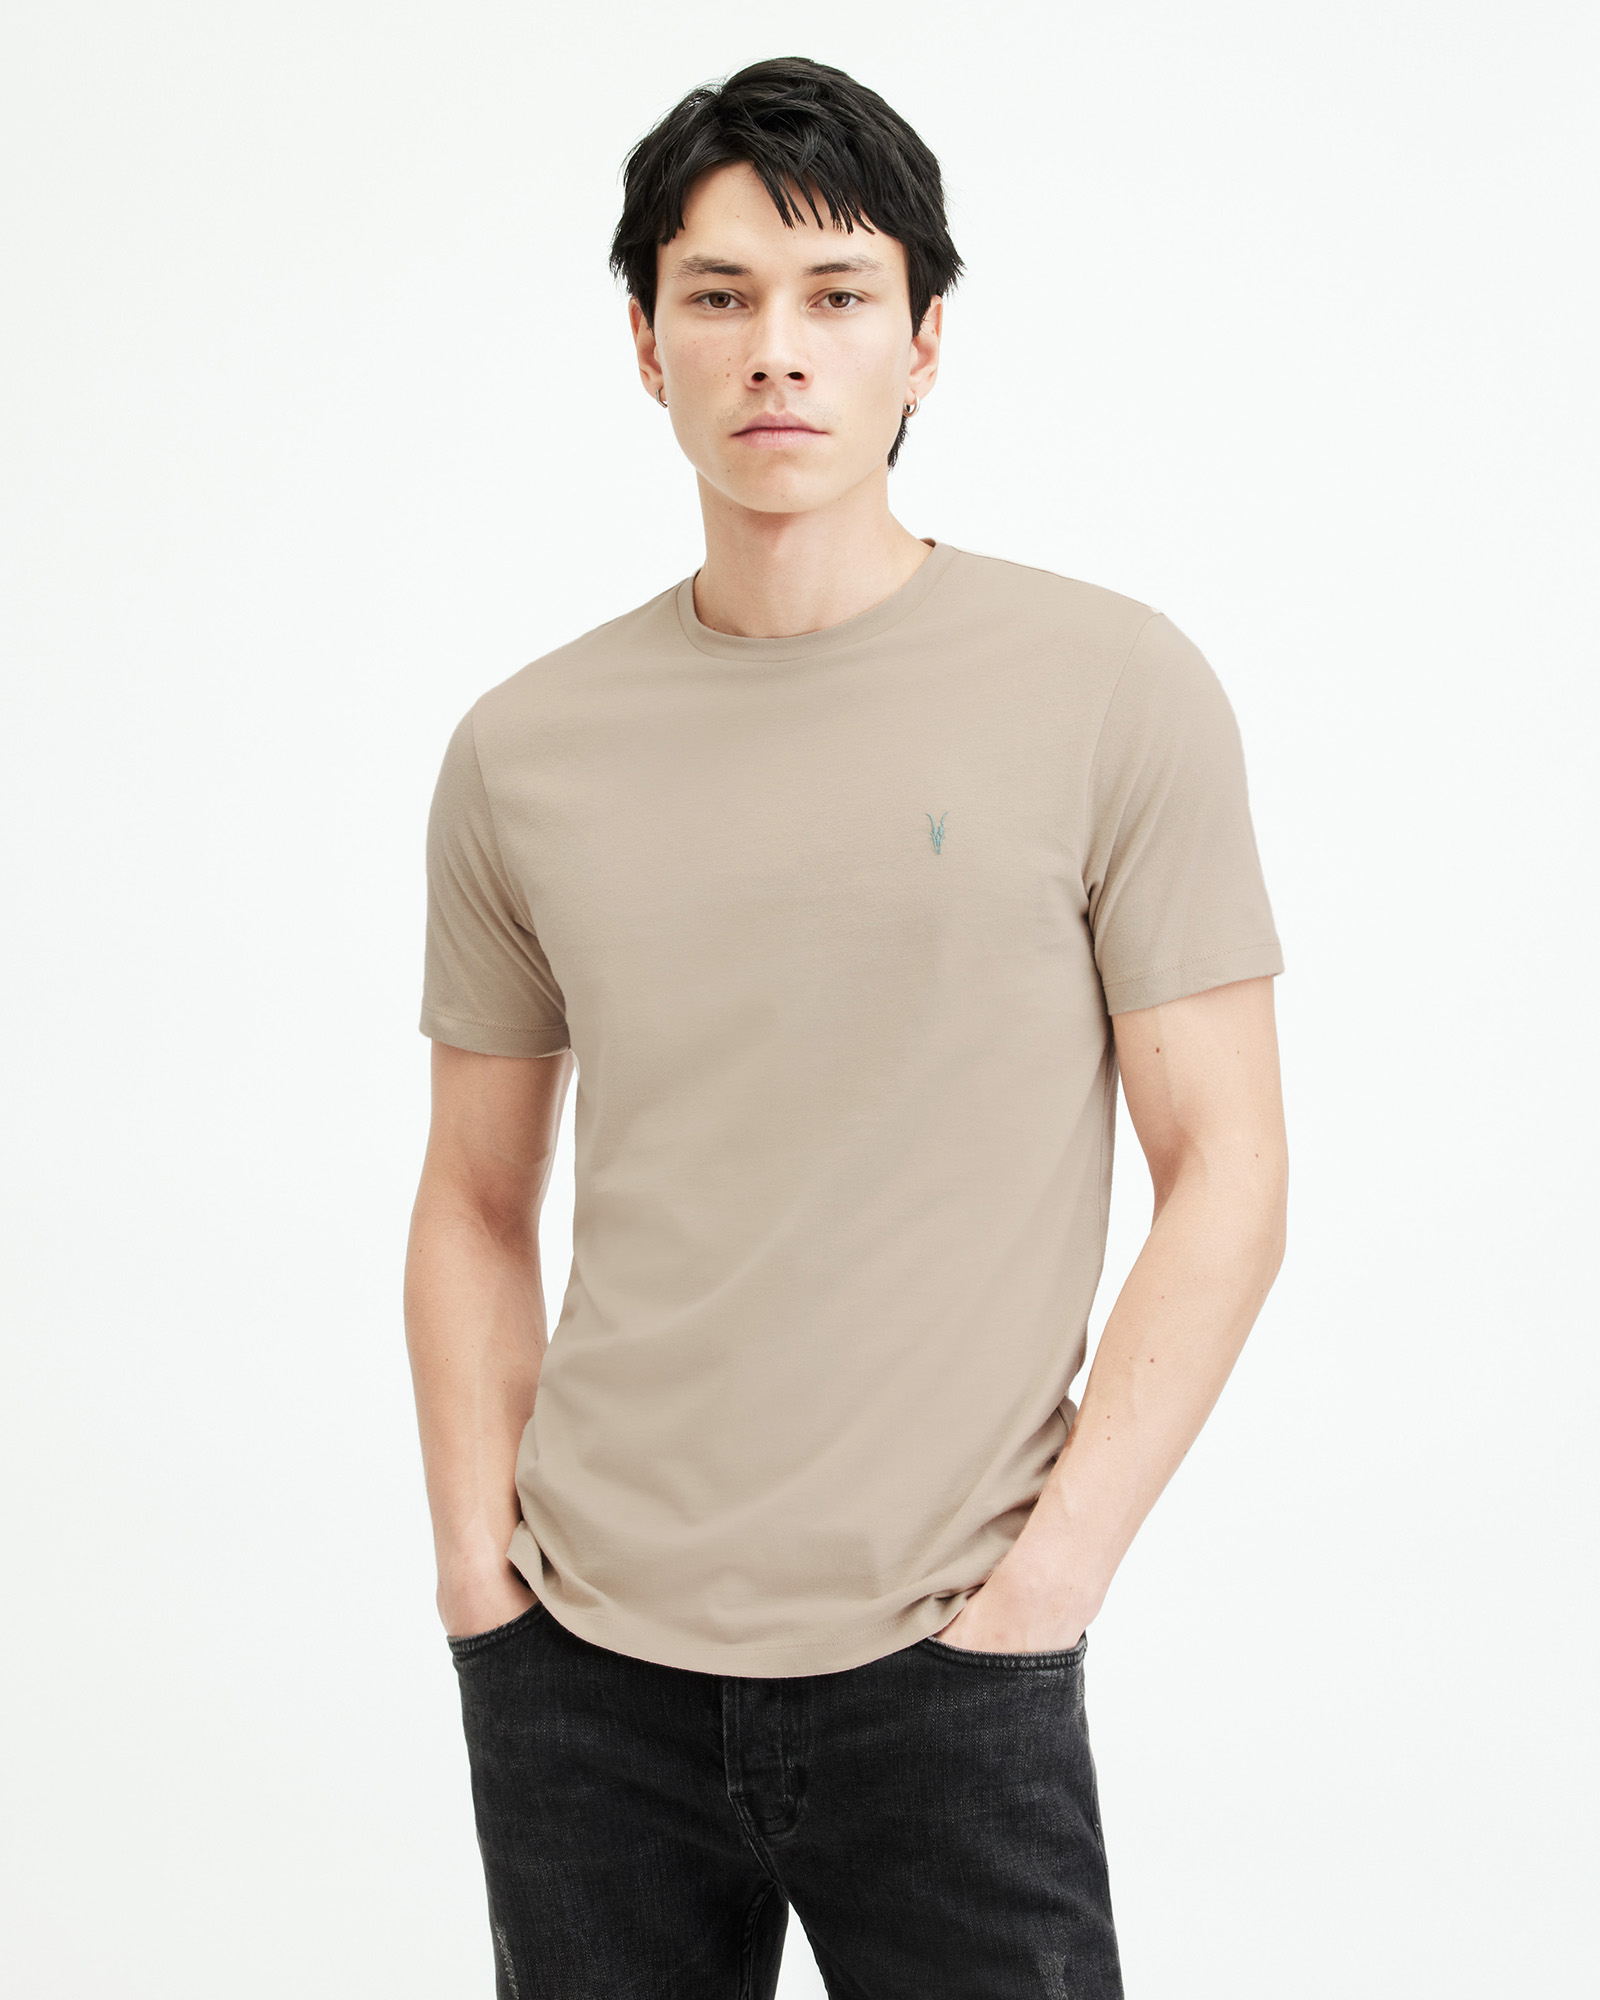 AllSaints Brace Brushed Cotton Contrast T-Shirt,, TINTED GREY